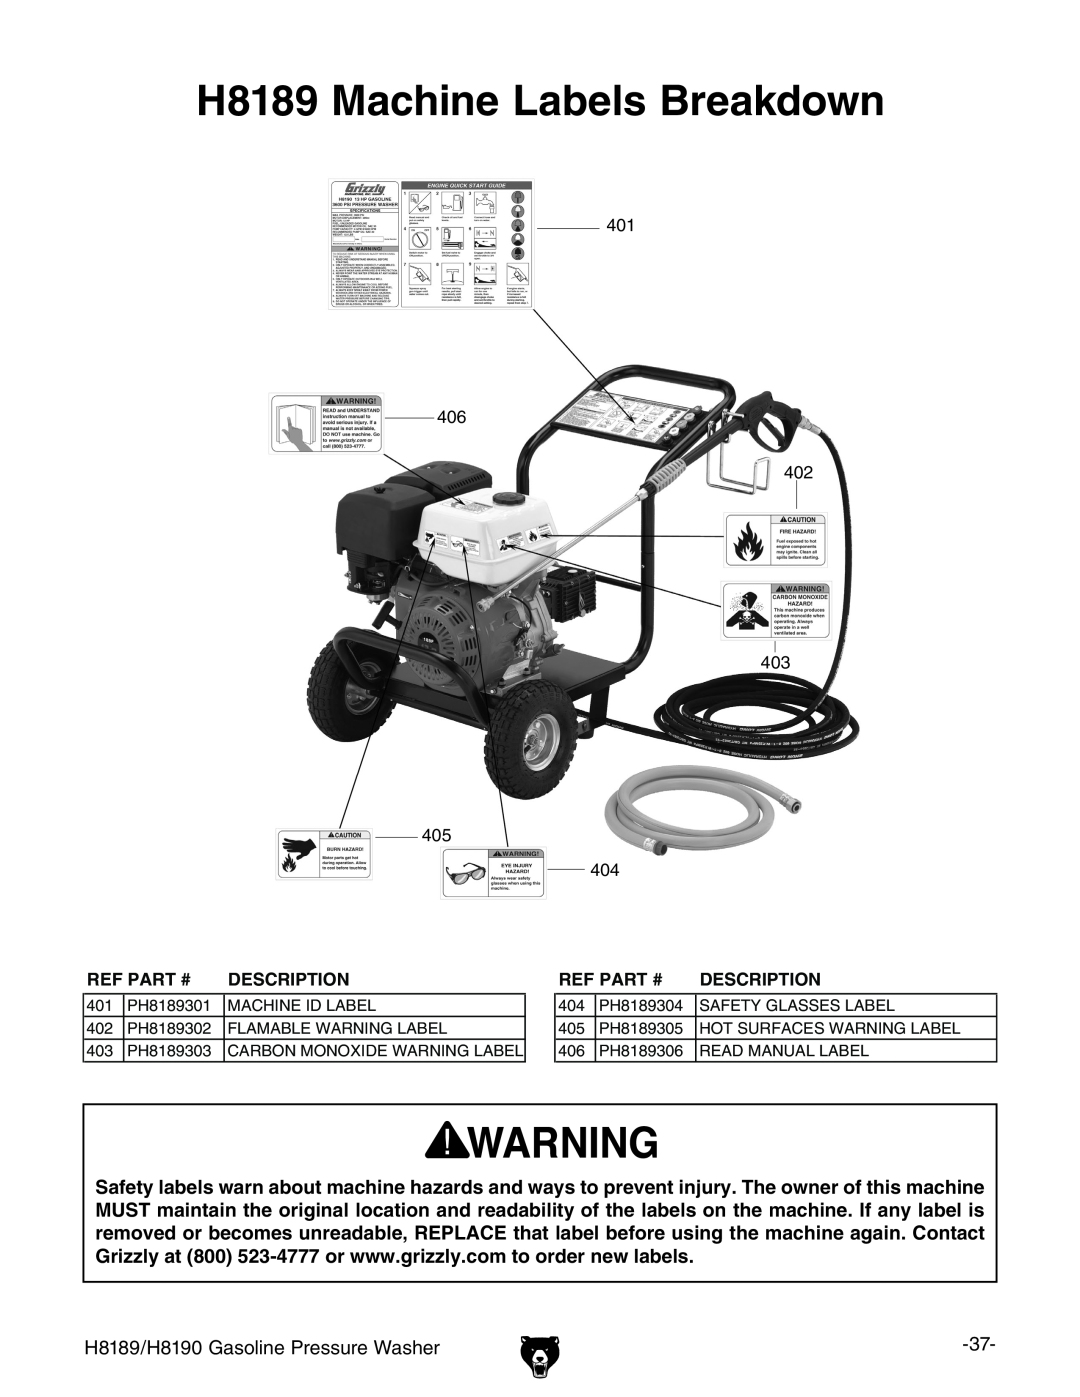 Grizzly owner manual H8189 Machine Labels Breakdown, H8189/H8190 Gasoline Pressure Washer, Ref Part #, Description 